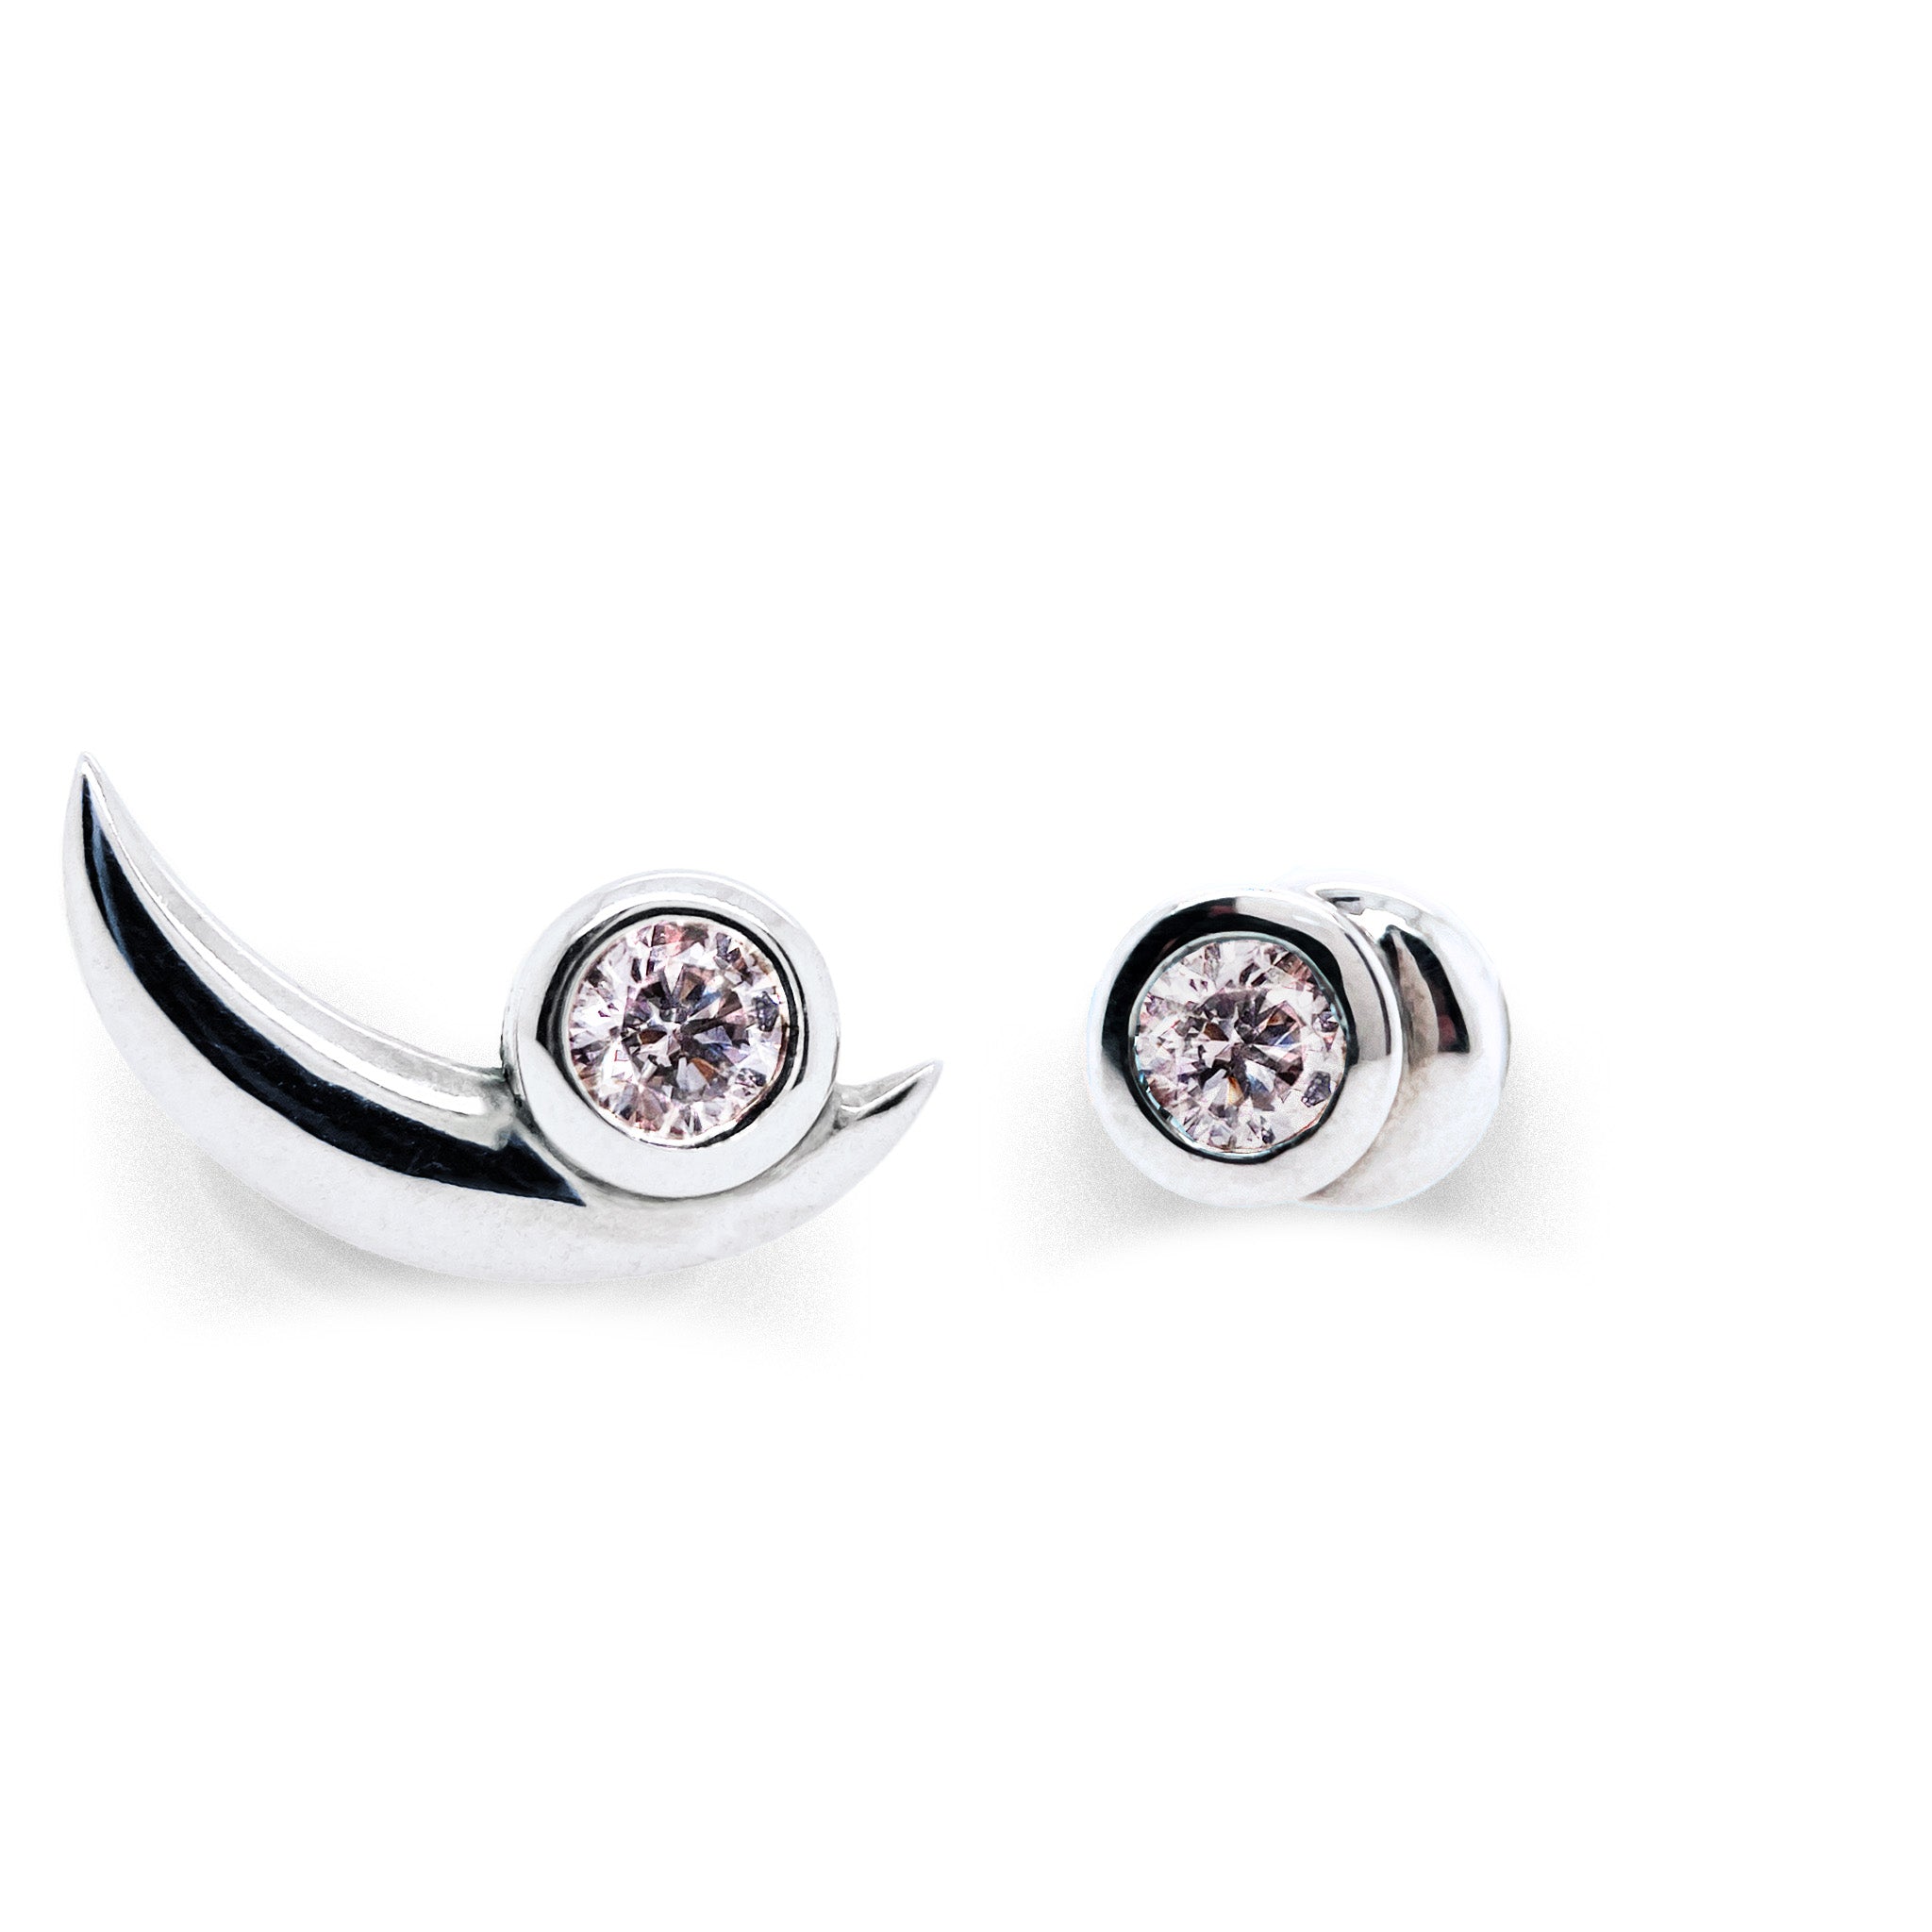 White gold diamond earrings mix and match set